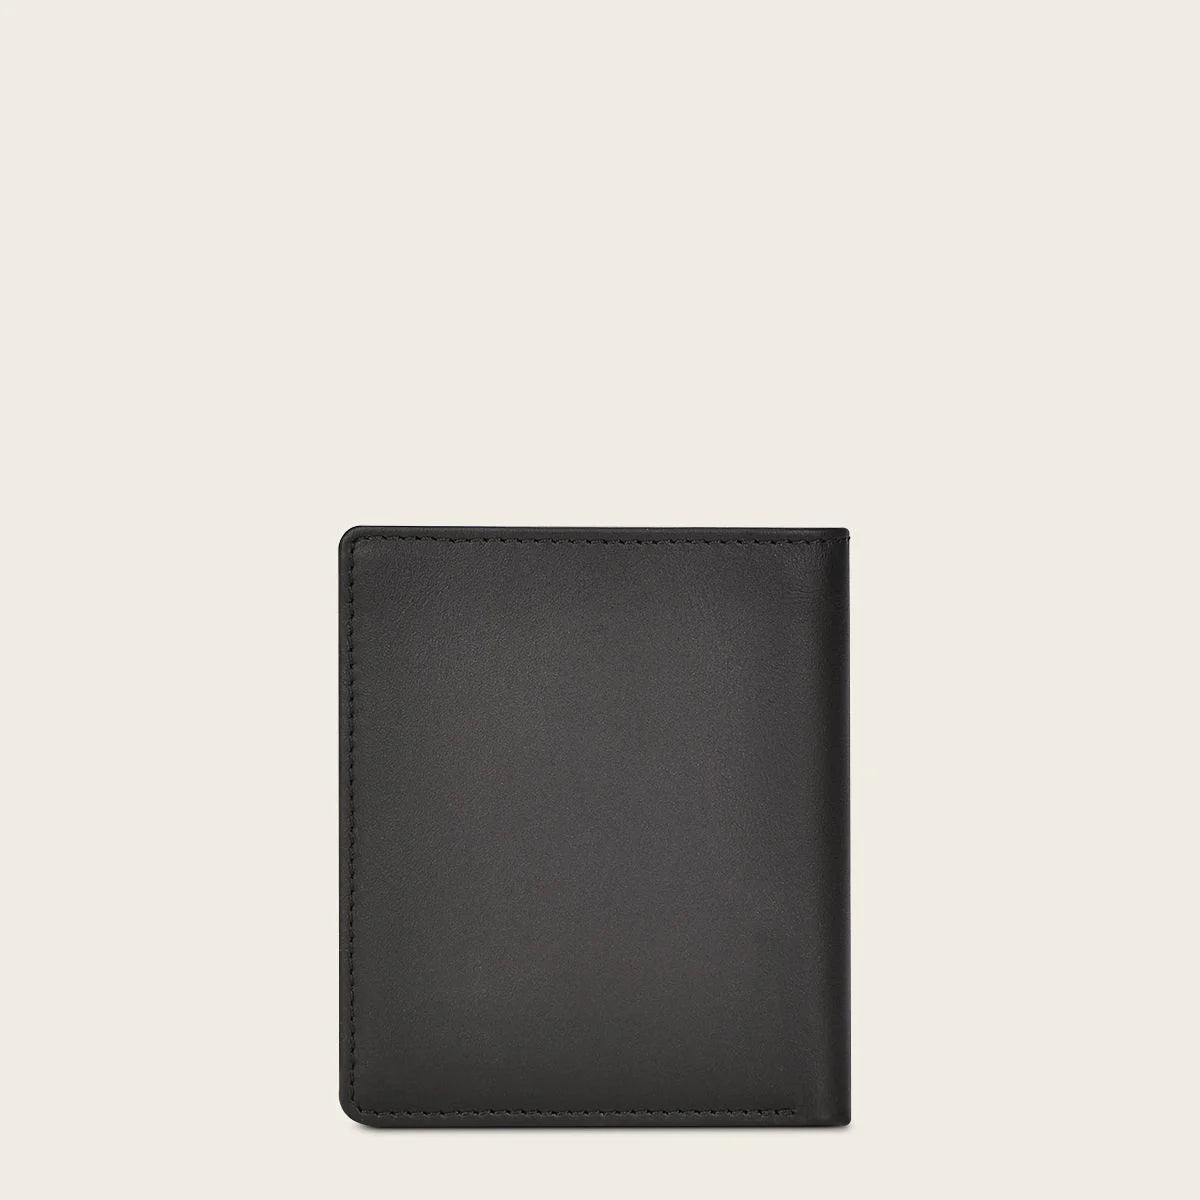 Black bovine leather wallet with Cuadra monogram